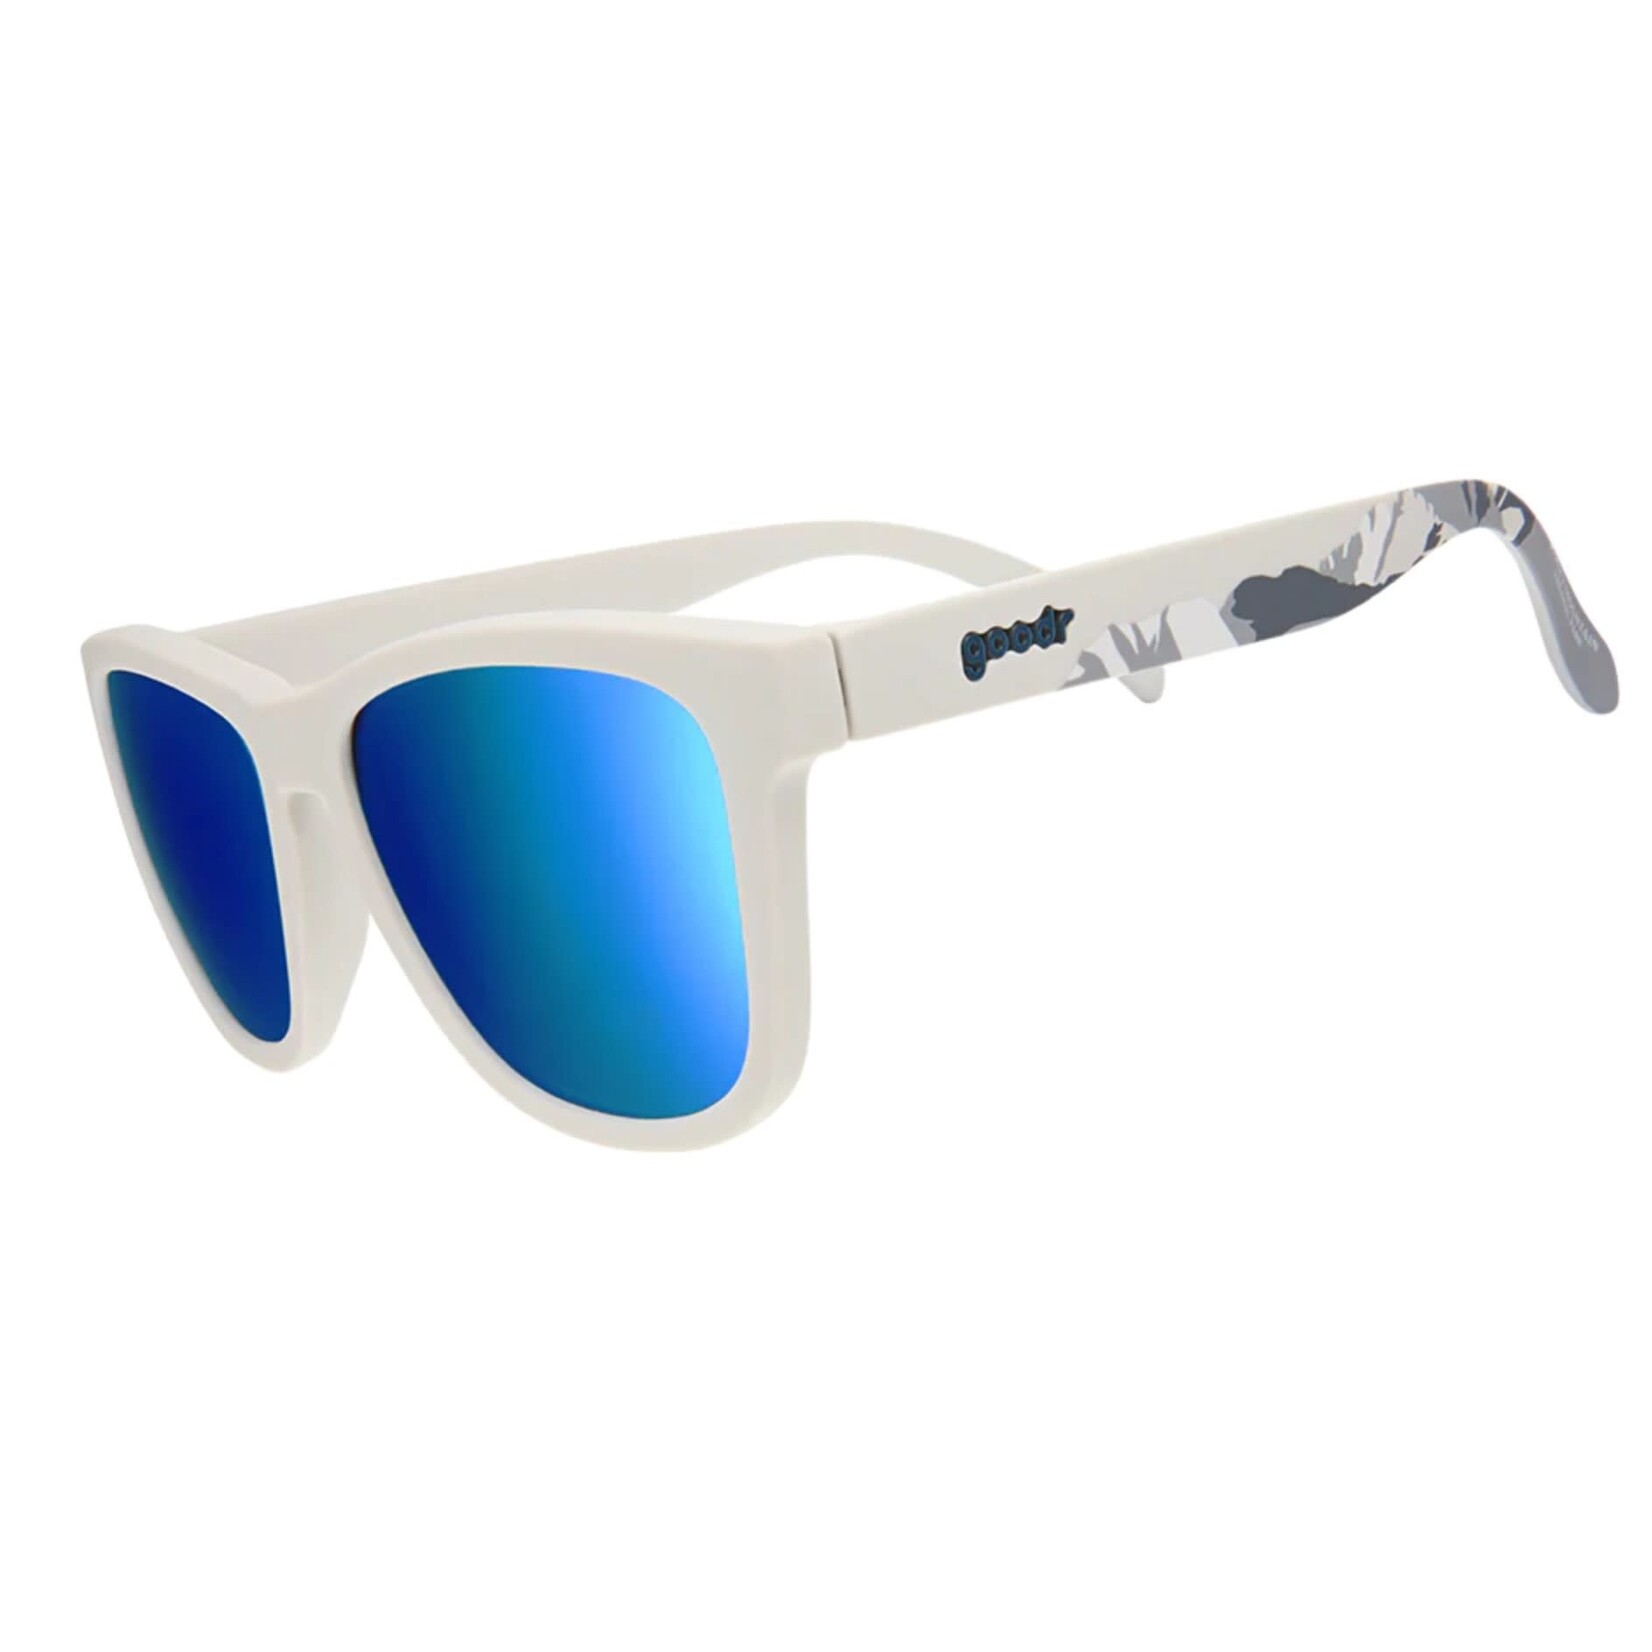 Goodr Goodr "Rocky Mountain" Sunglasses